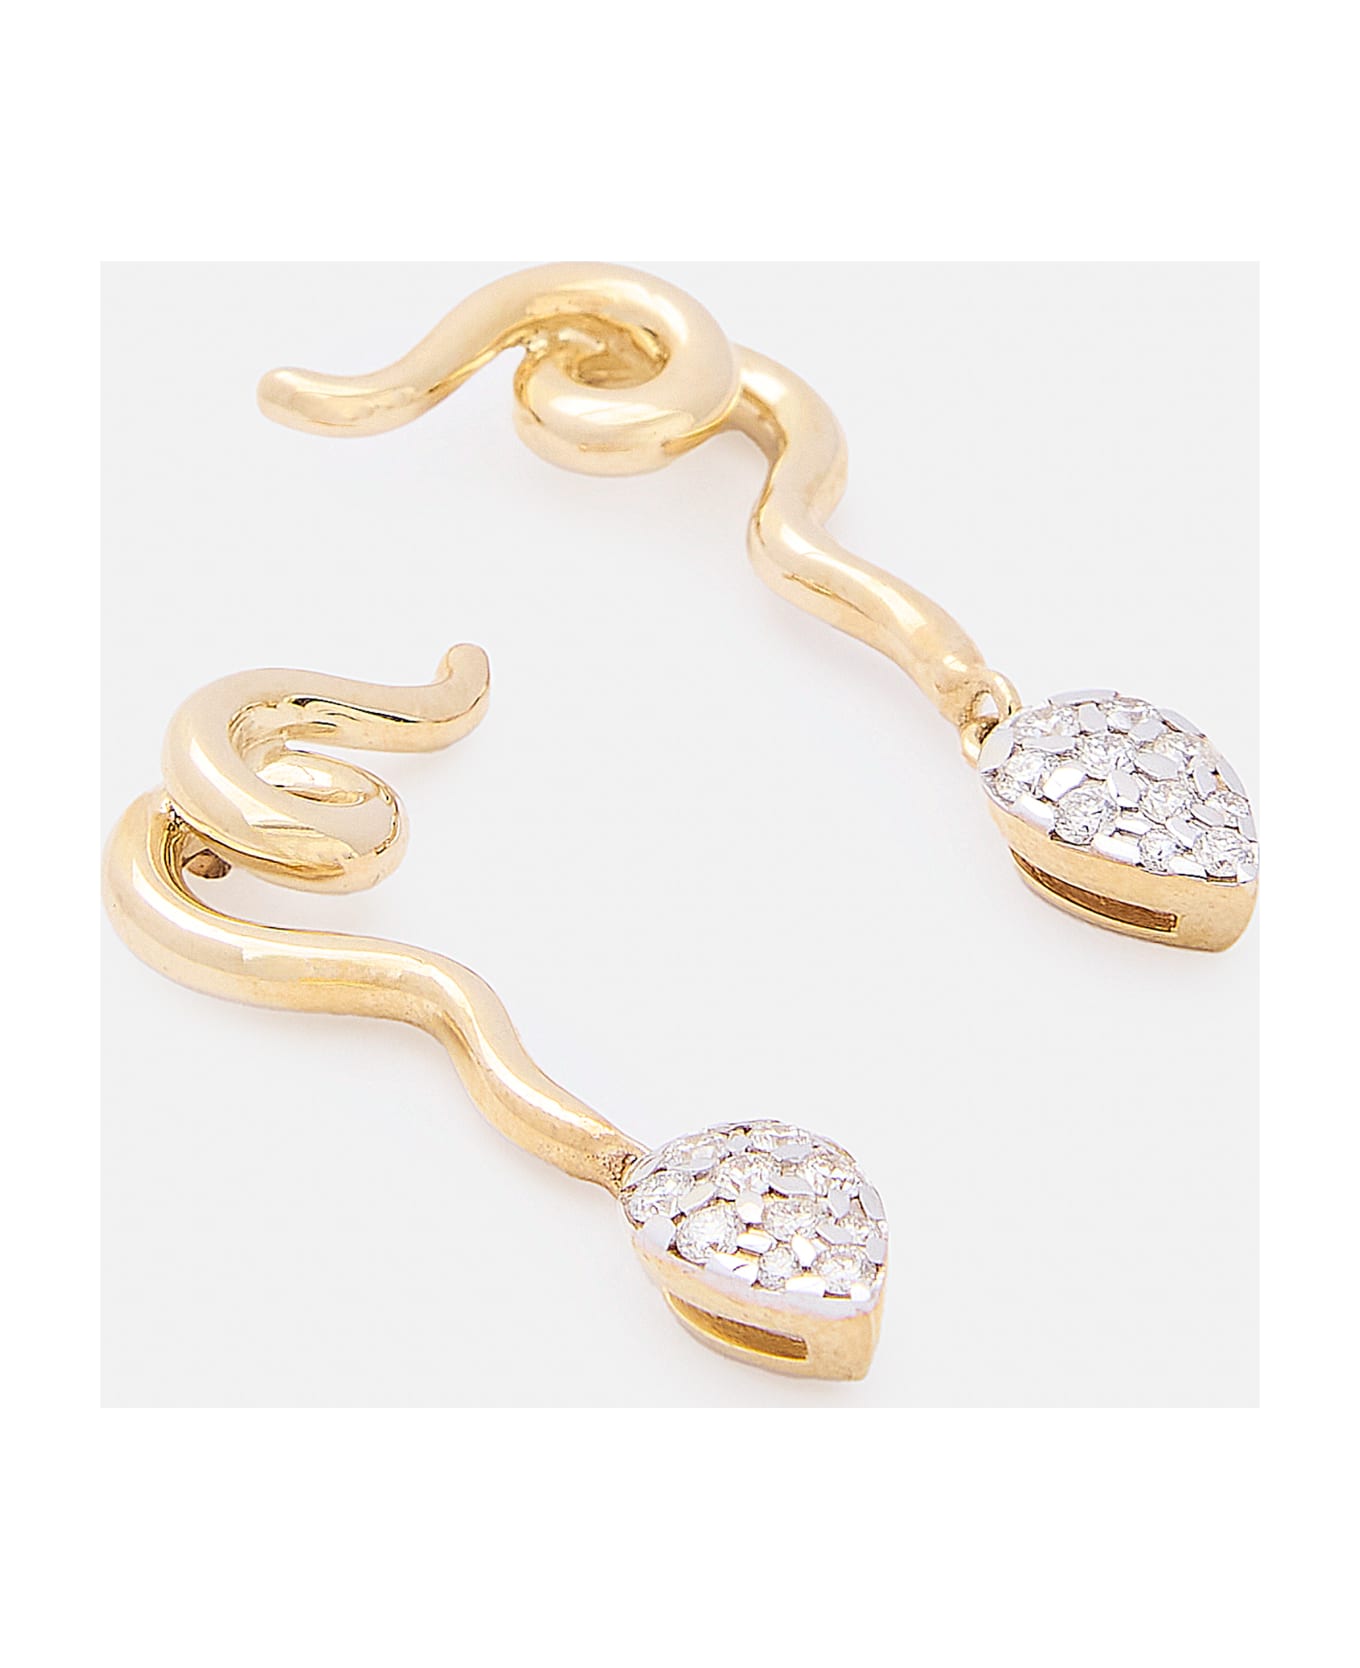 Bea Bongiasca 9k Gold Earrings Vine With Diamonds - Golden ネックレス